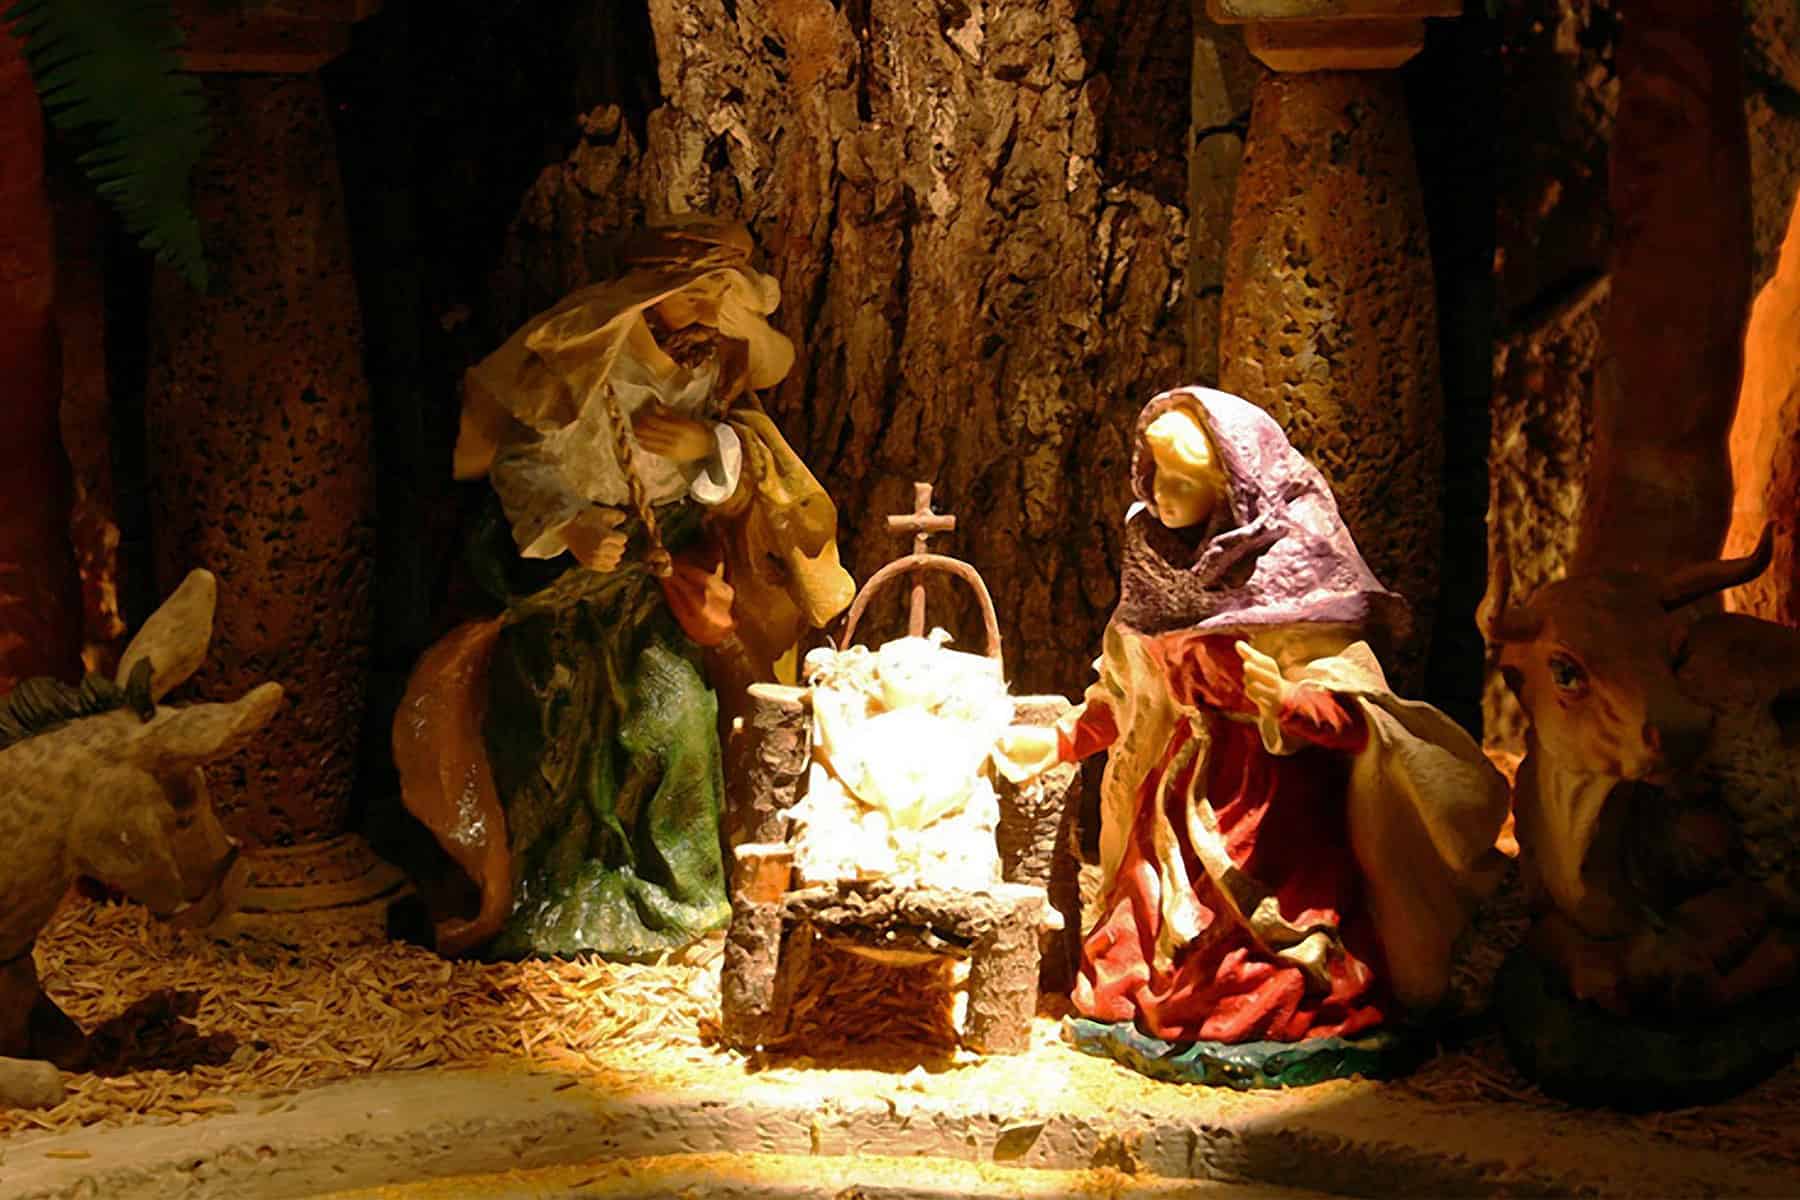 Costa Rica holidays: A nativity scene